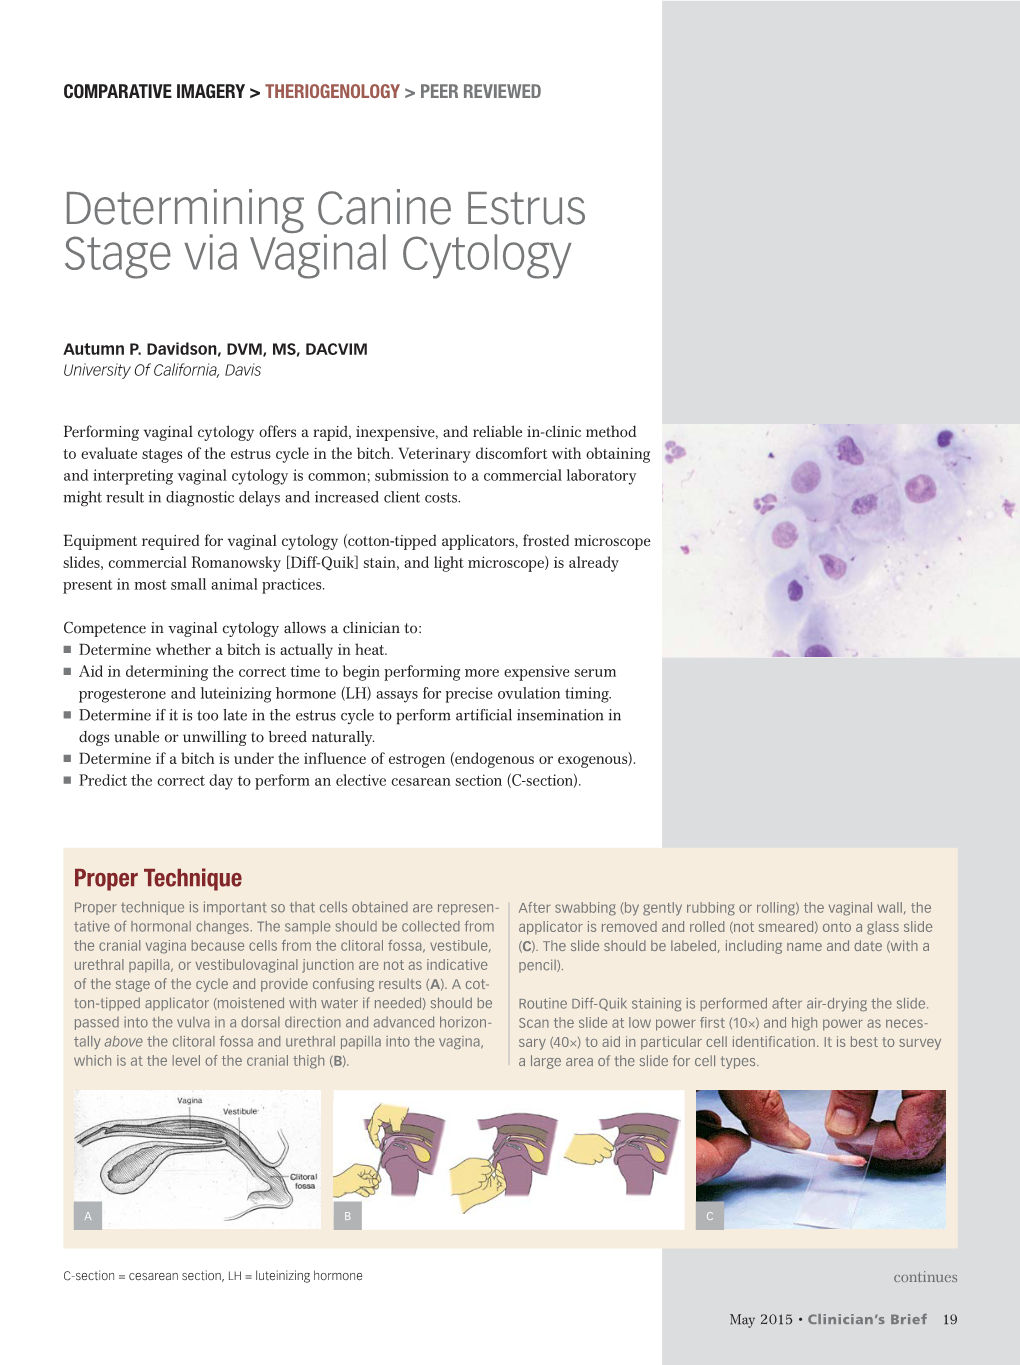 Determining Canine Estrus Stage Via Vaginal Cytology